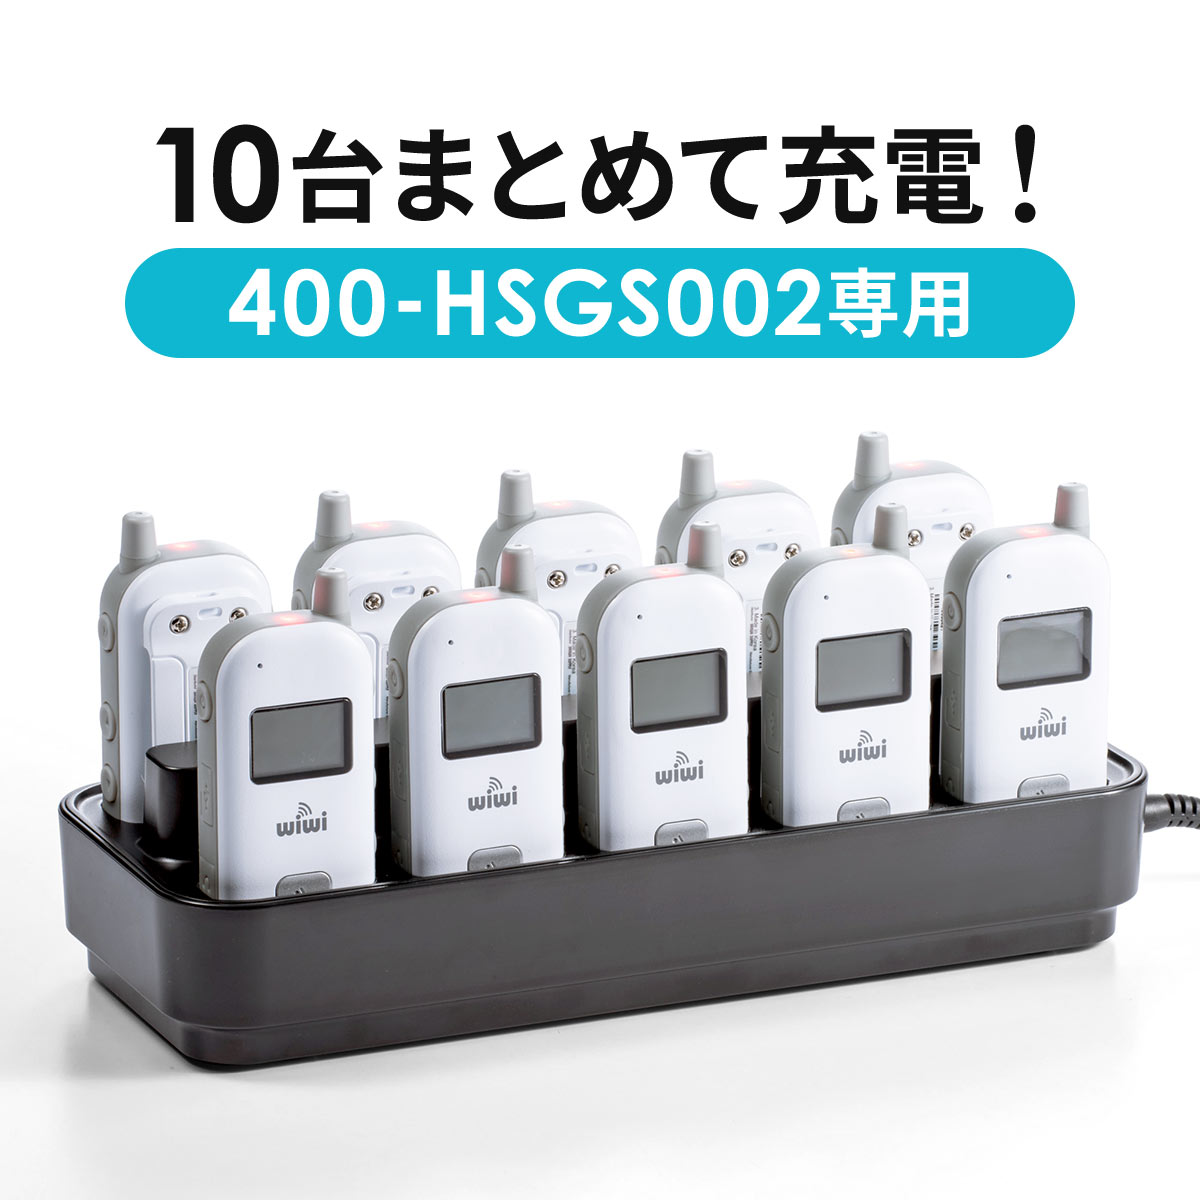 400-HSGS002専用充電ステーション（ツアーガイド充電クレードル・10台用）